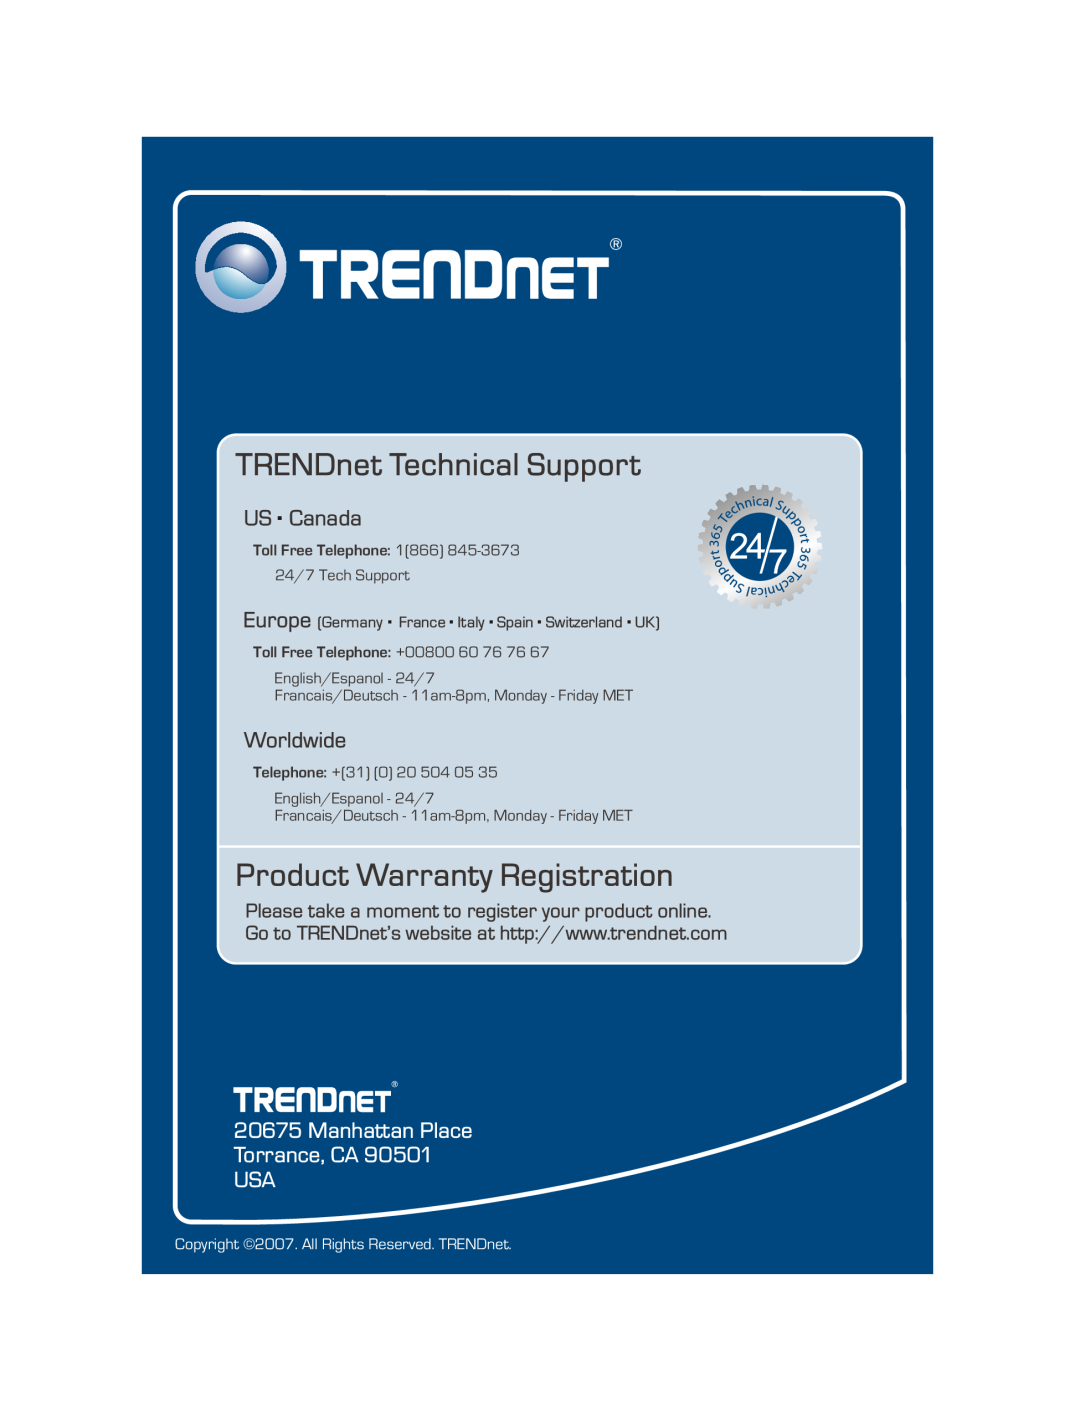 TRENDnet TFU-430 TRENDnet Technical Support, Product Warranty Registration, US . Canada, Worldwide, Toll Free Telephone 